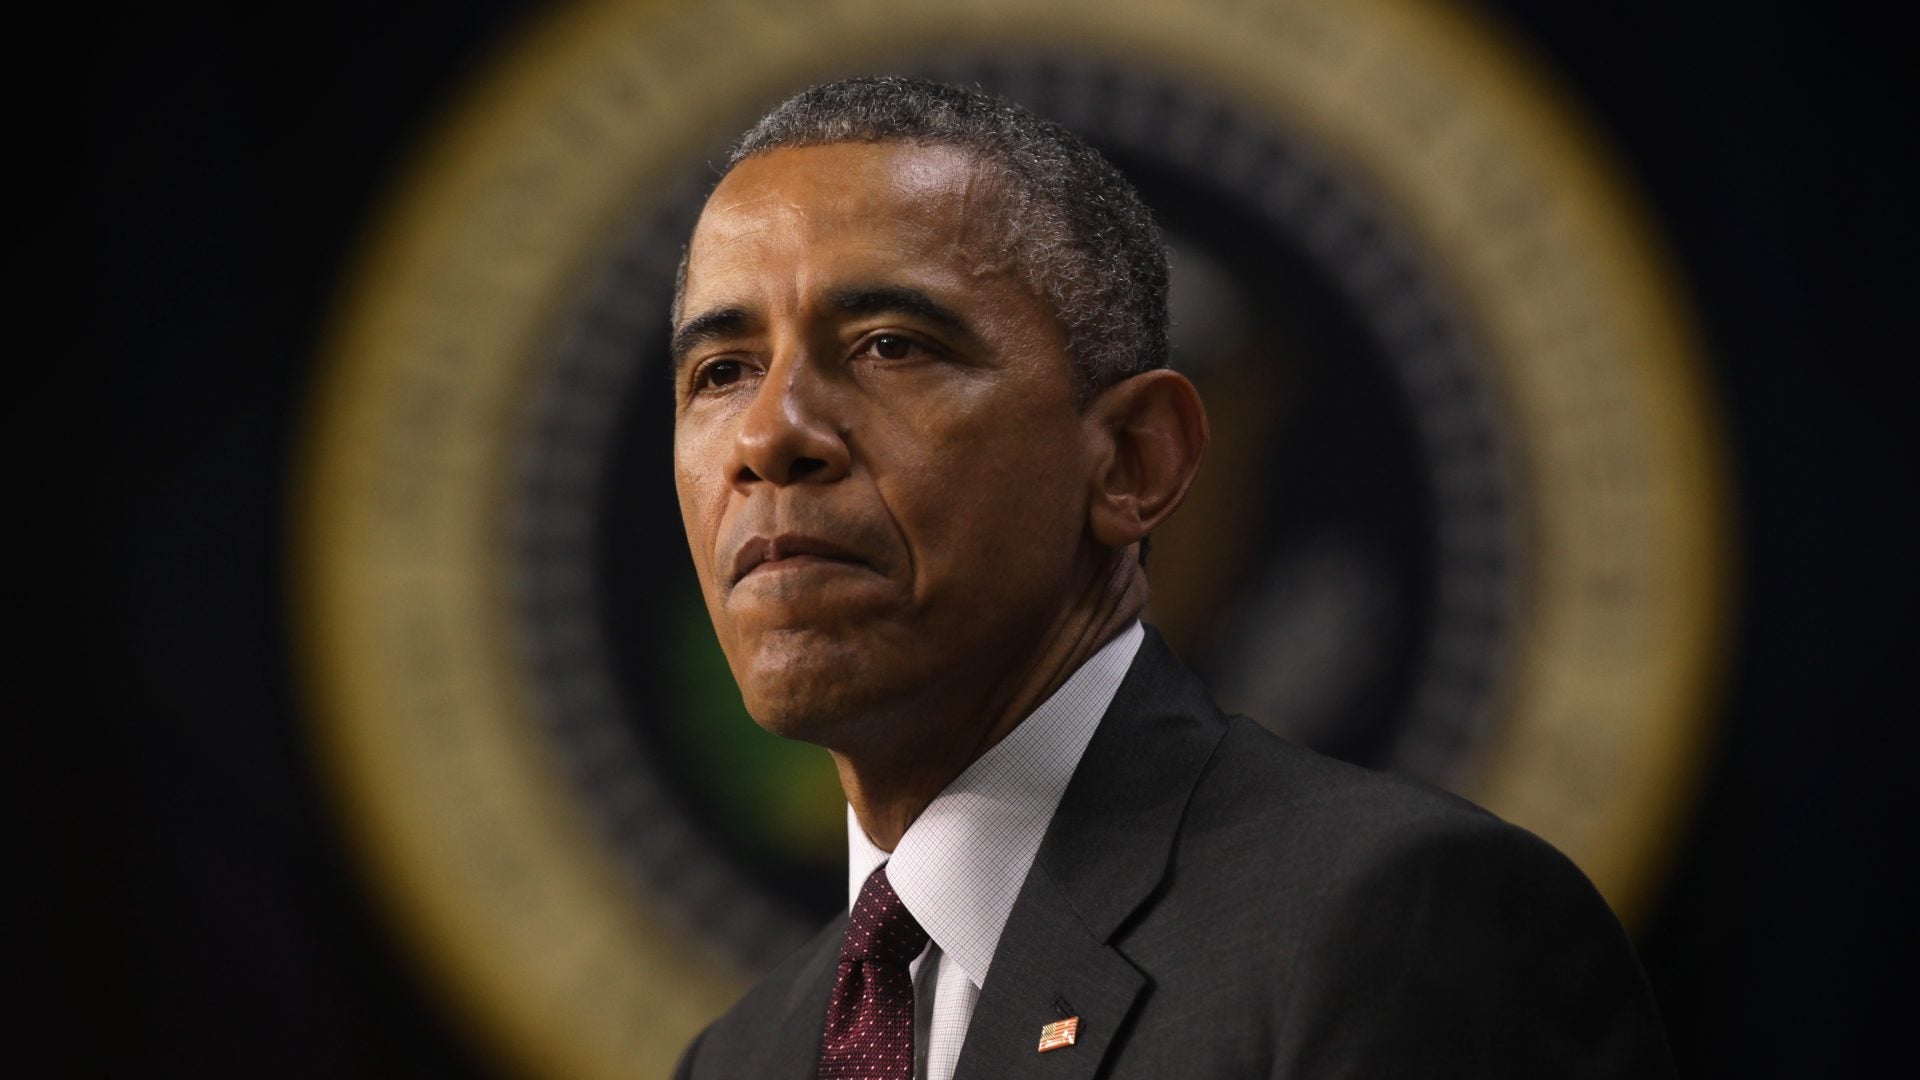 Barack Obama Calls MAGA Attack At U.S. Capitol 'A Moment Of Great Dishonor And Shame'